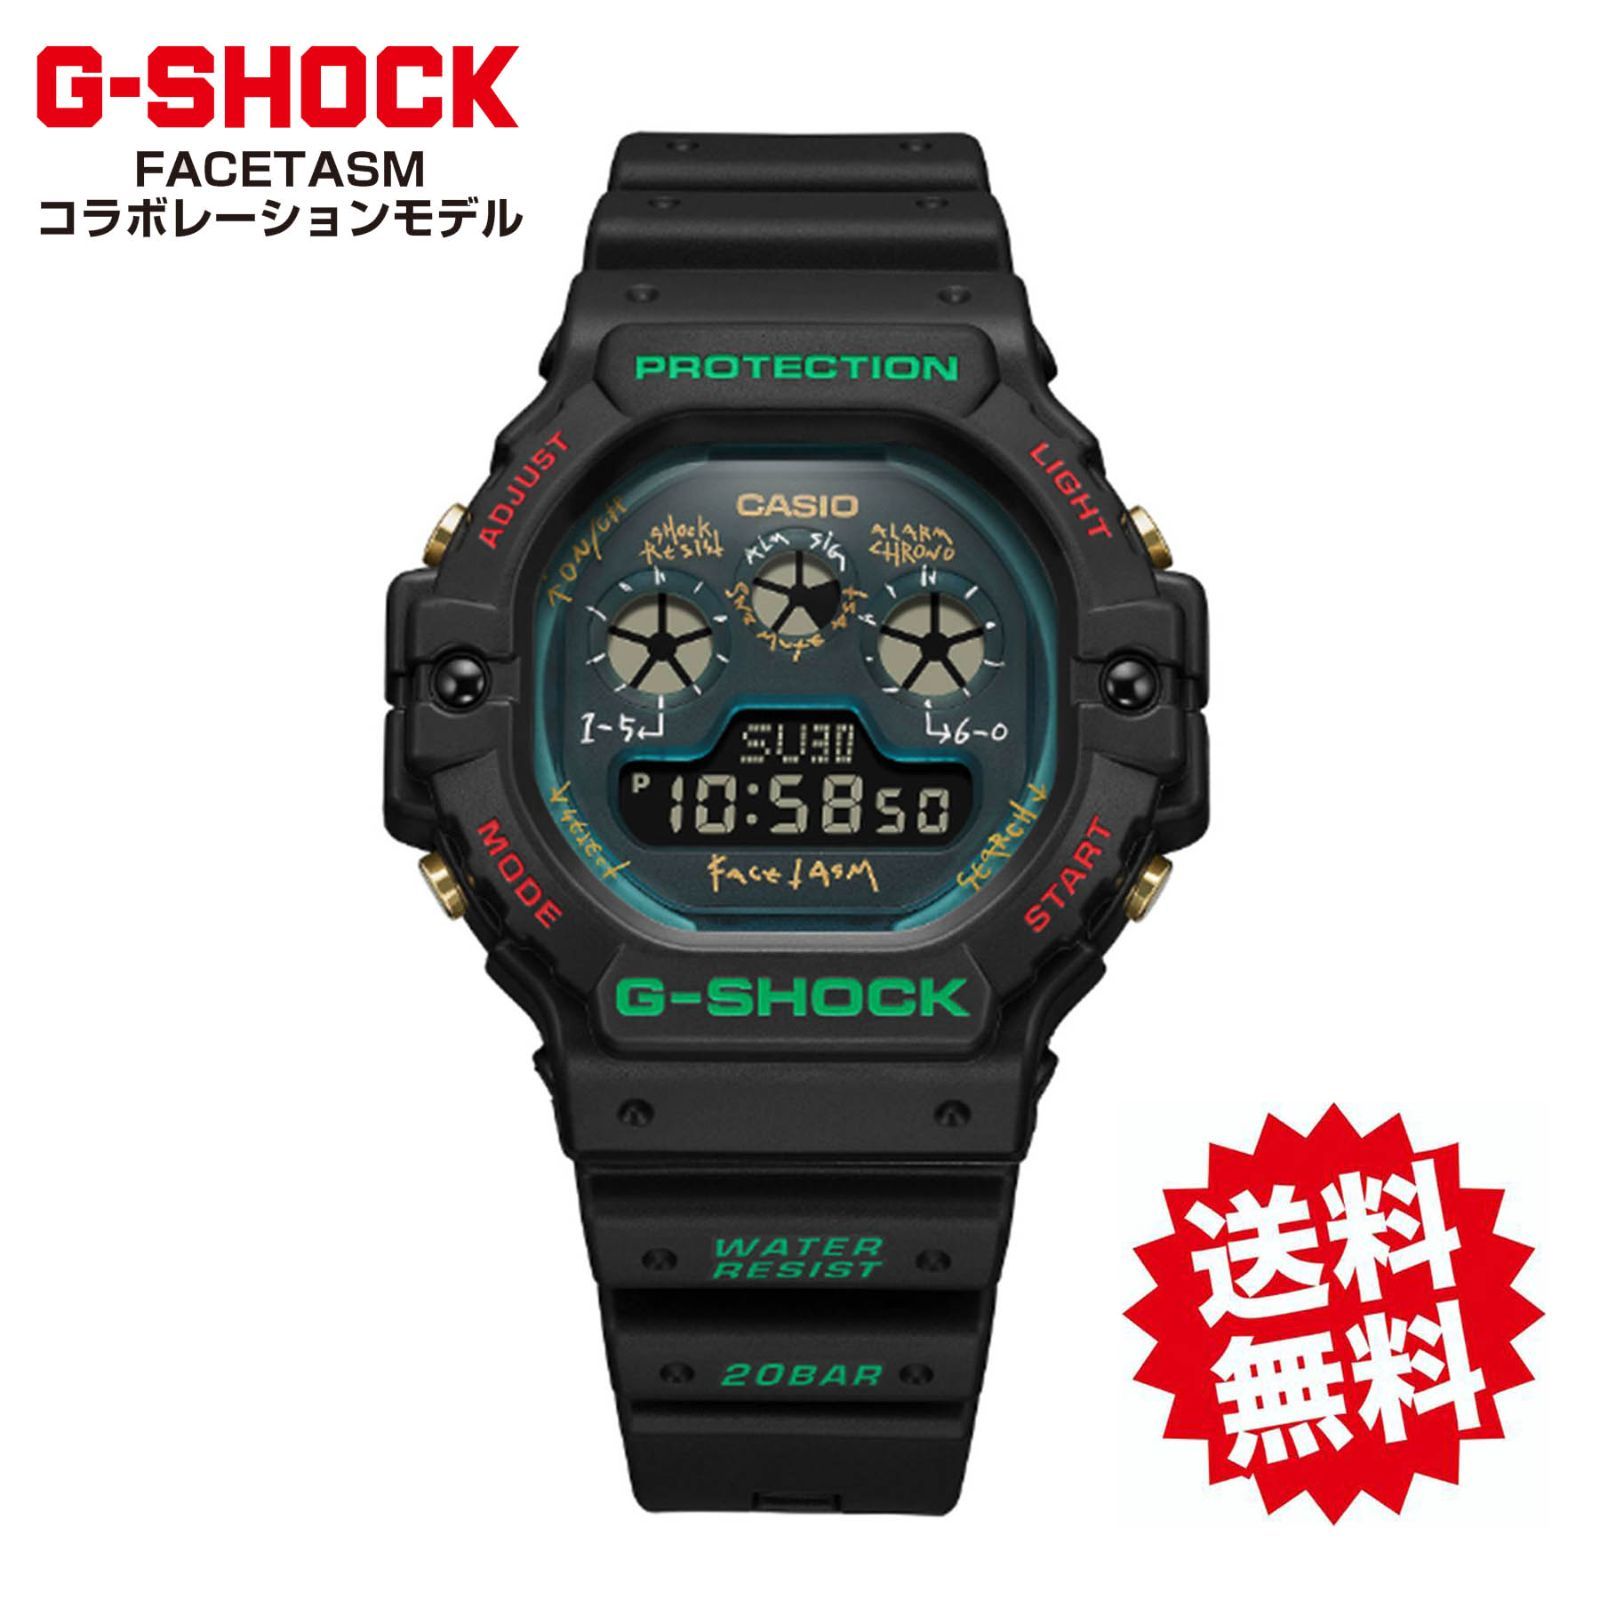 CASIO/G-SHOCK FACETASMコラボレーション】DW-5900FA-1JR /Gショック